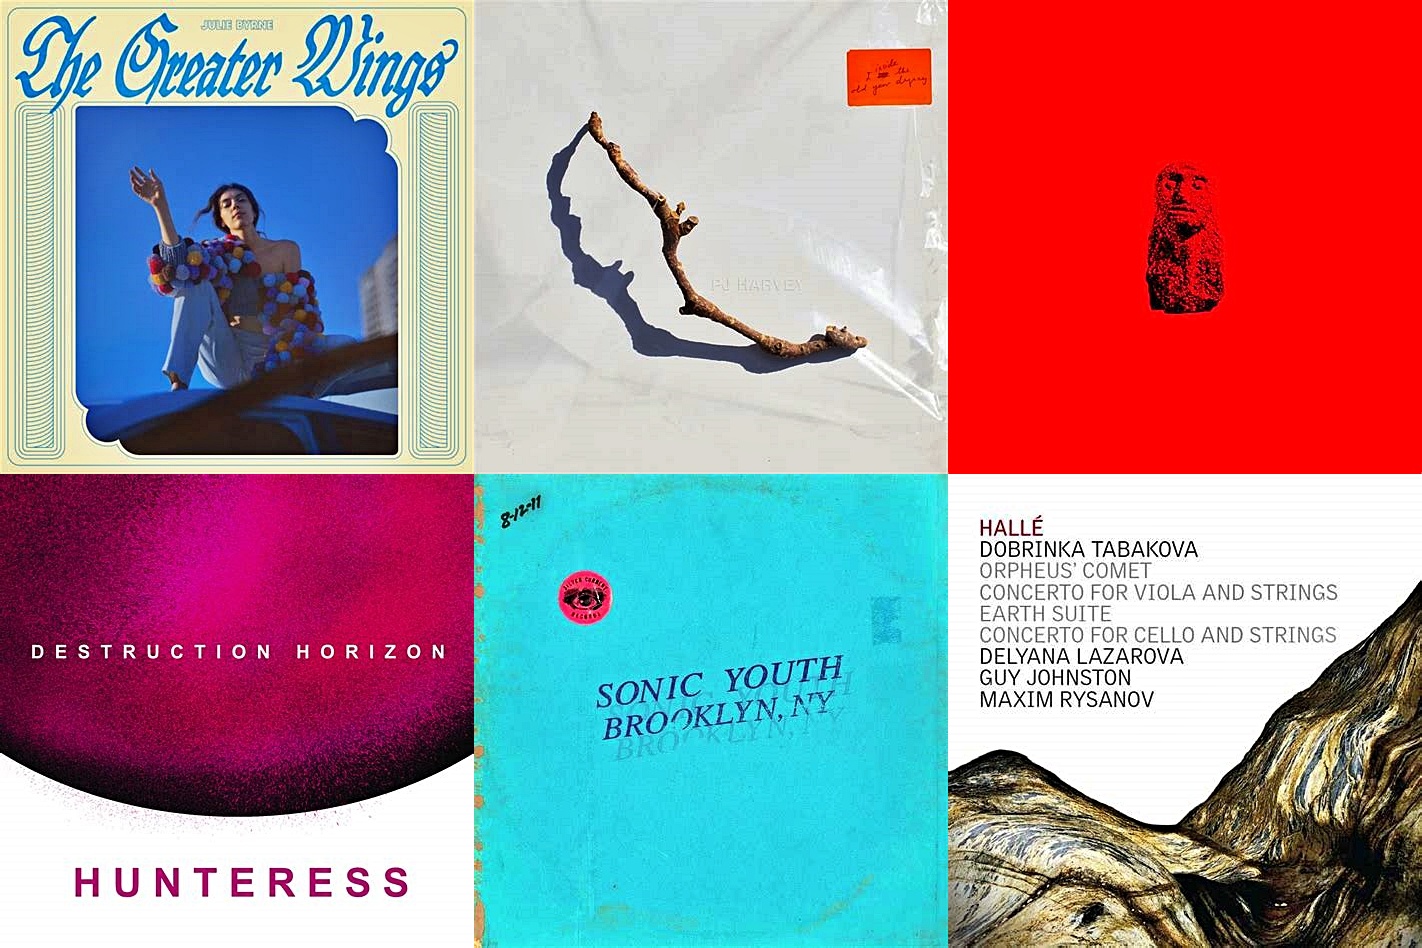 Moritz Garth: albums, songs, playlists